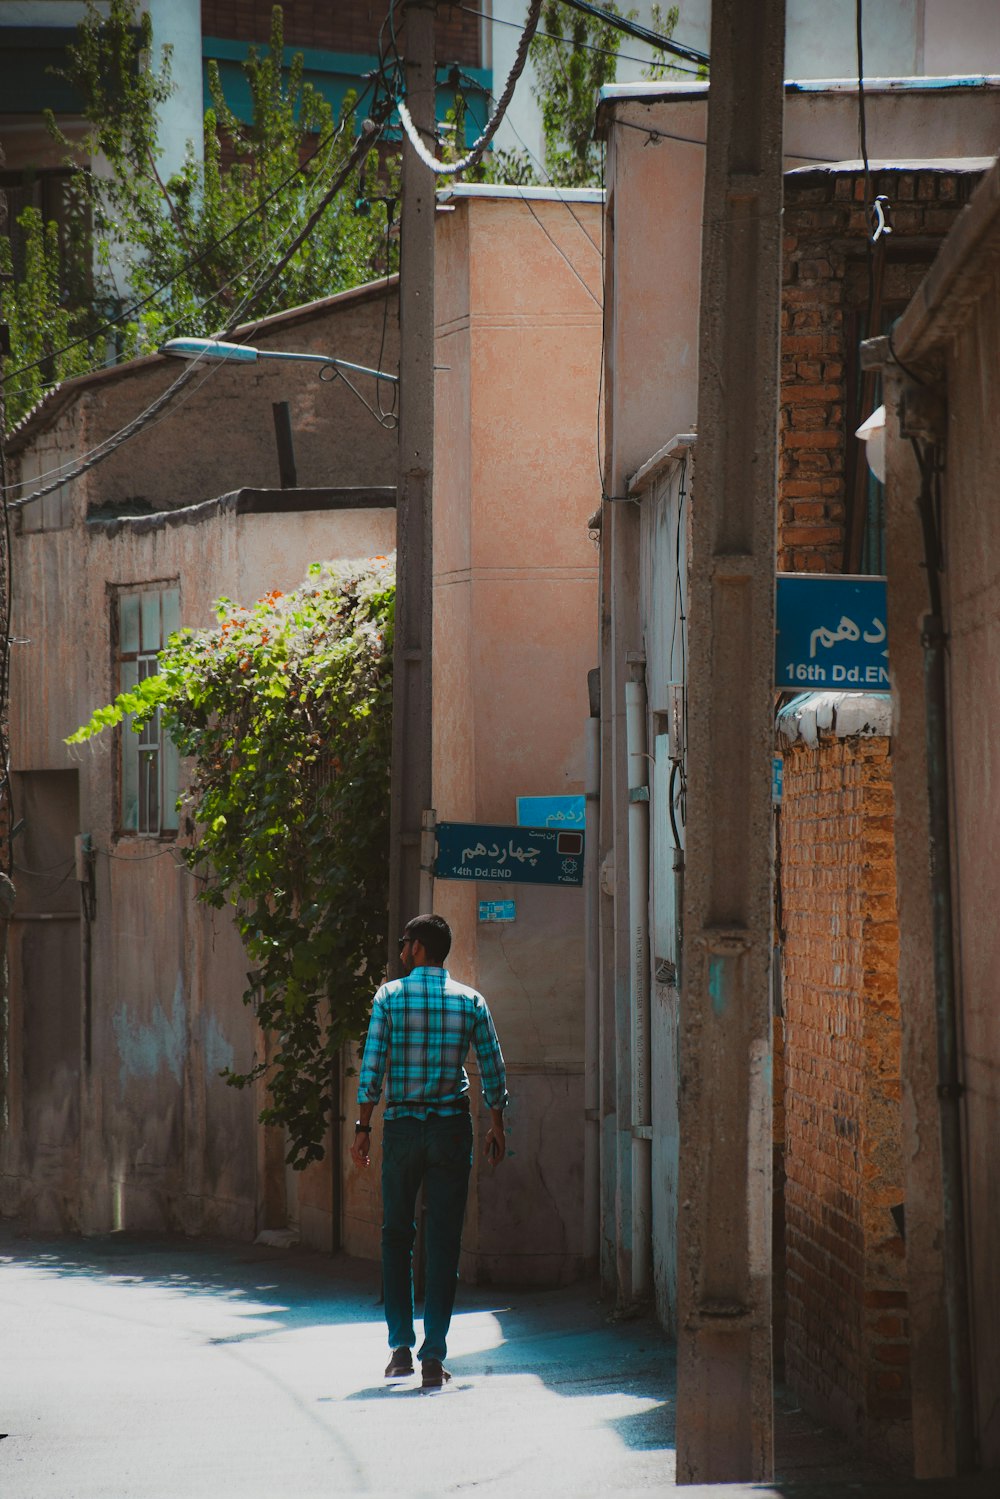 a man walking down a narrow alley way